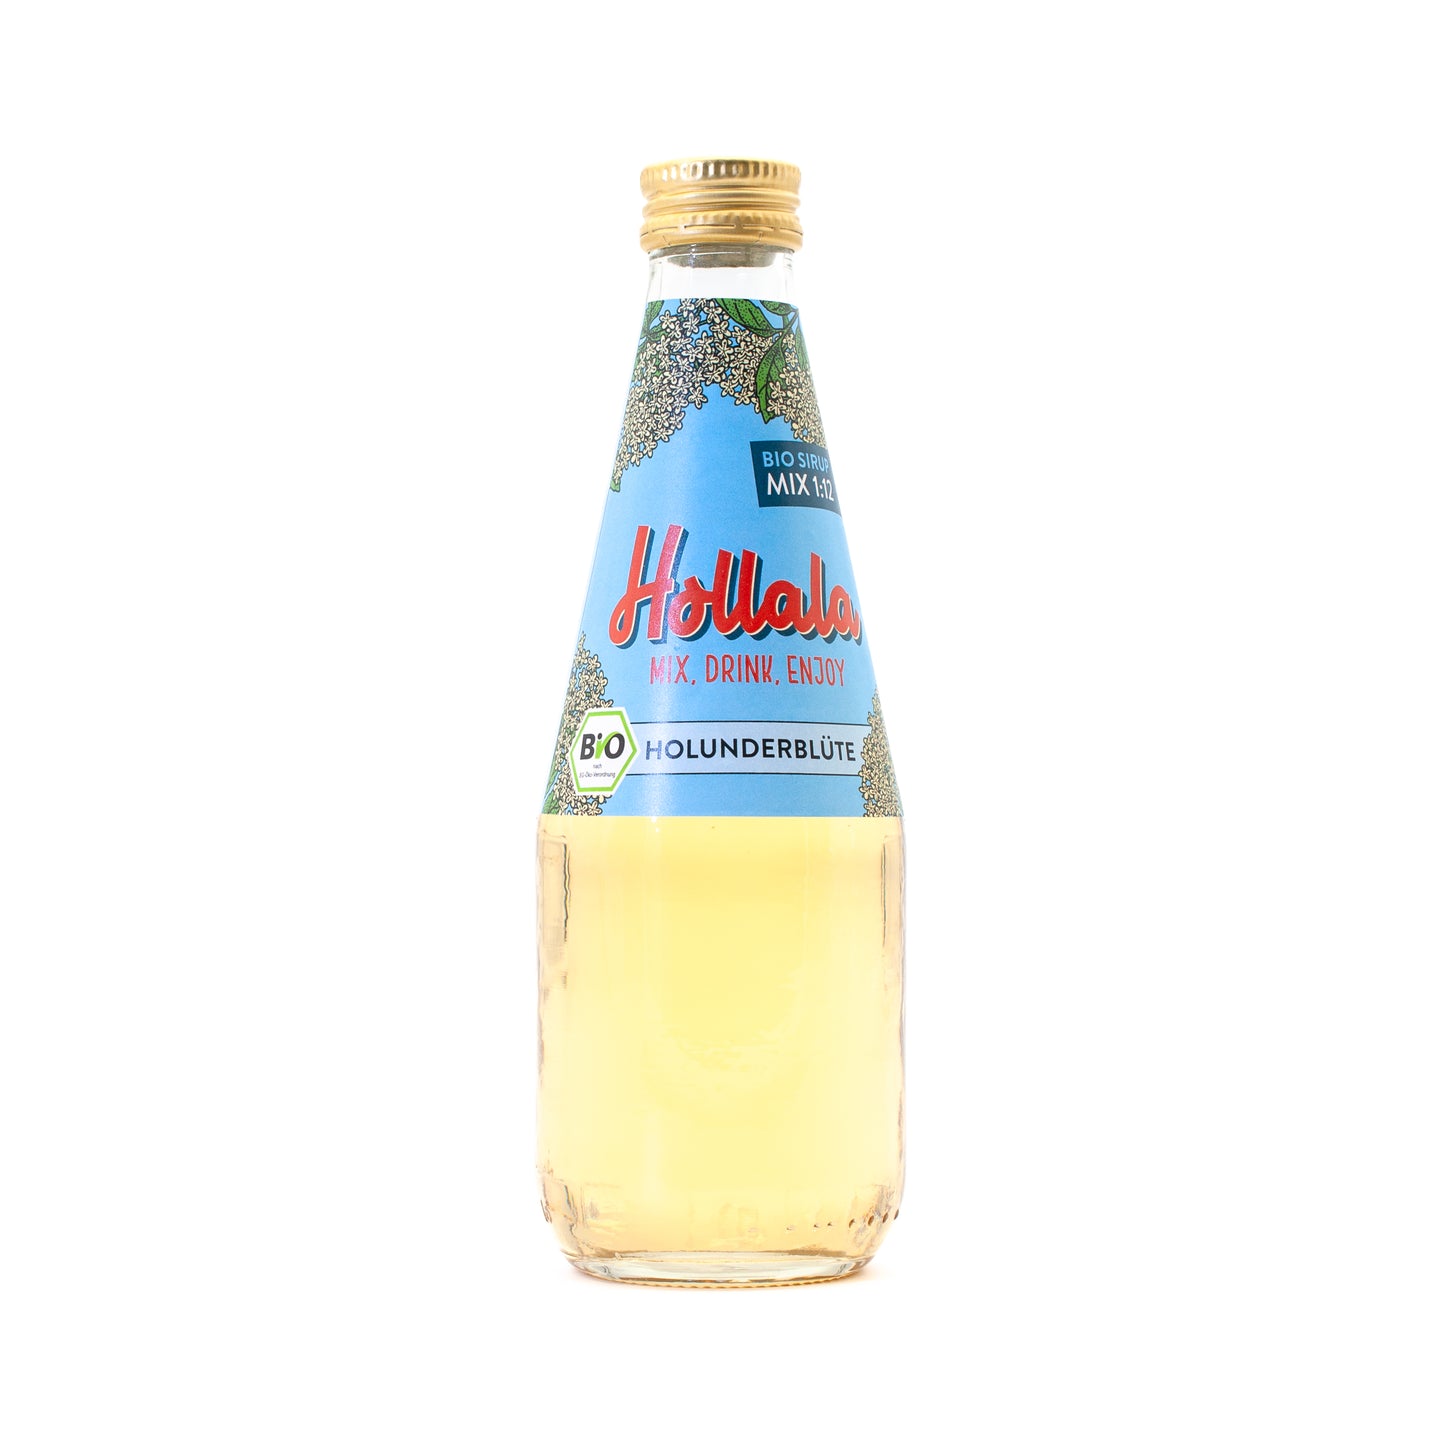 HOLLALA - Bio Sirup Holunderblüte 330ml - Hollala - mix.drink.enjoy!